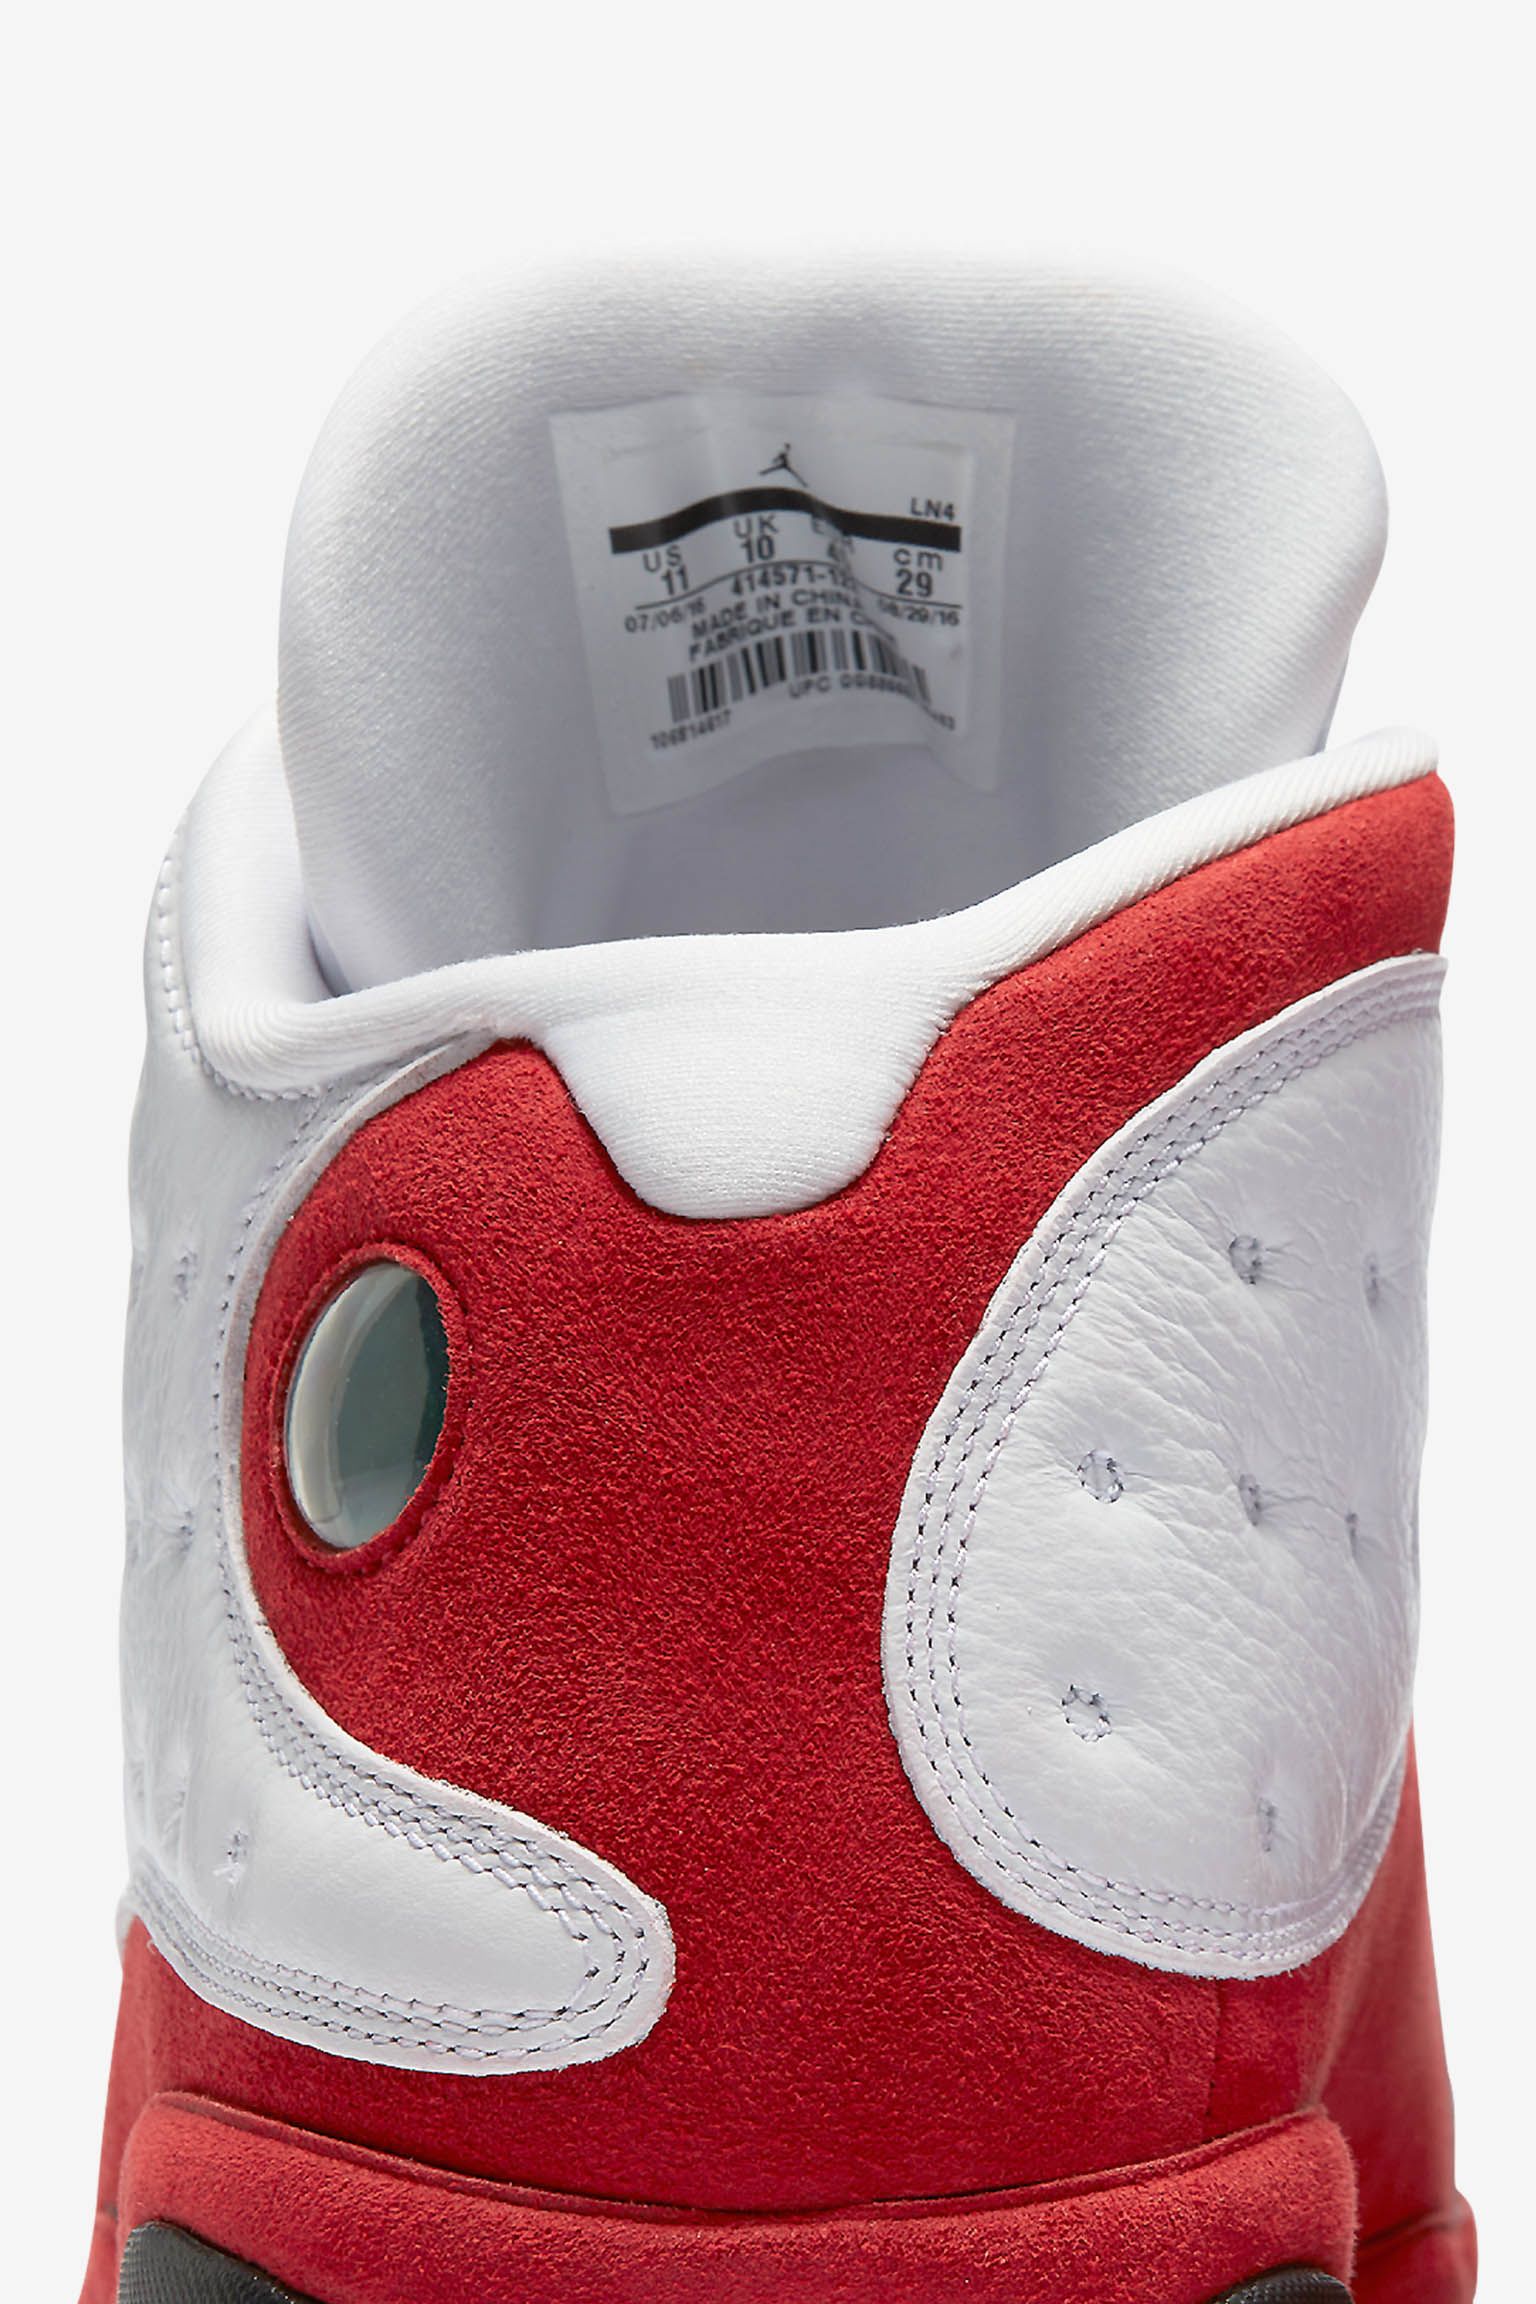 Jordan 13 Retro "White &amp; Team Red". Nike SNKRS ES